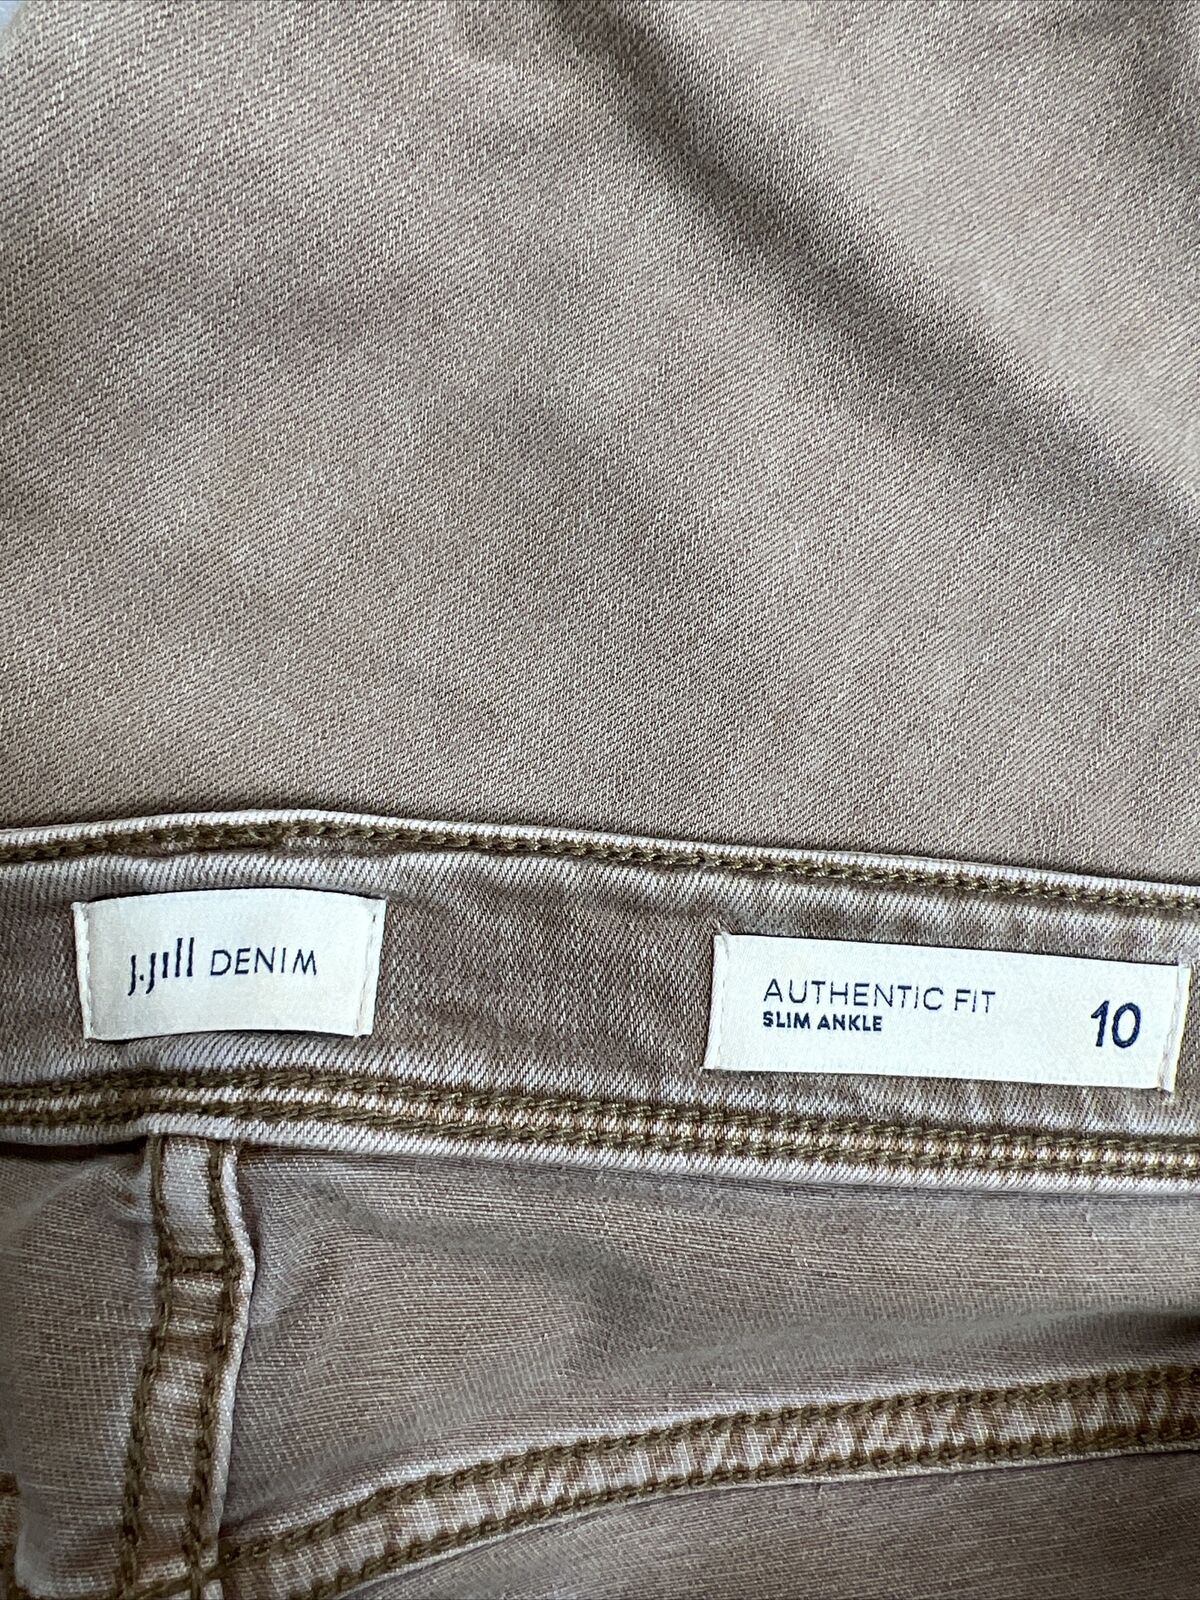 J. Jill Women's Beige Authentic Fit Slim Ankle Stretch Jeans - 10